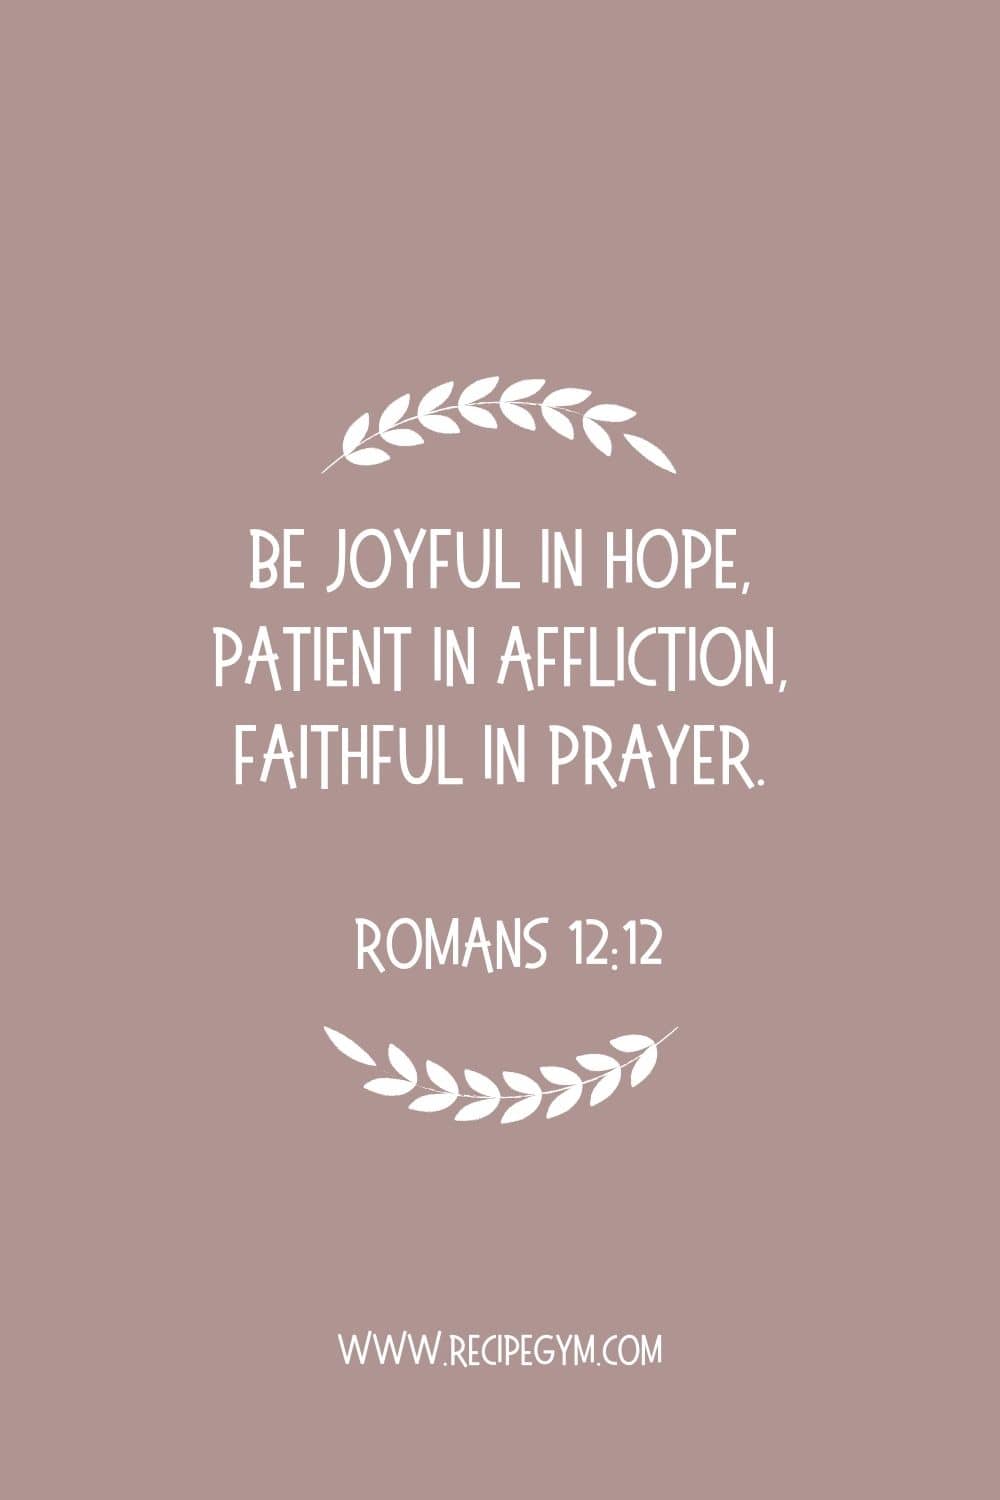 Prayers against affliction